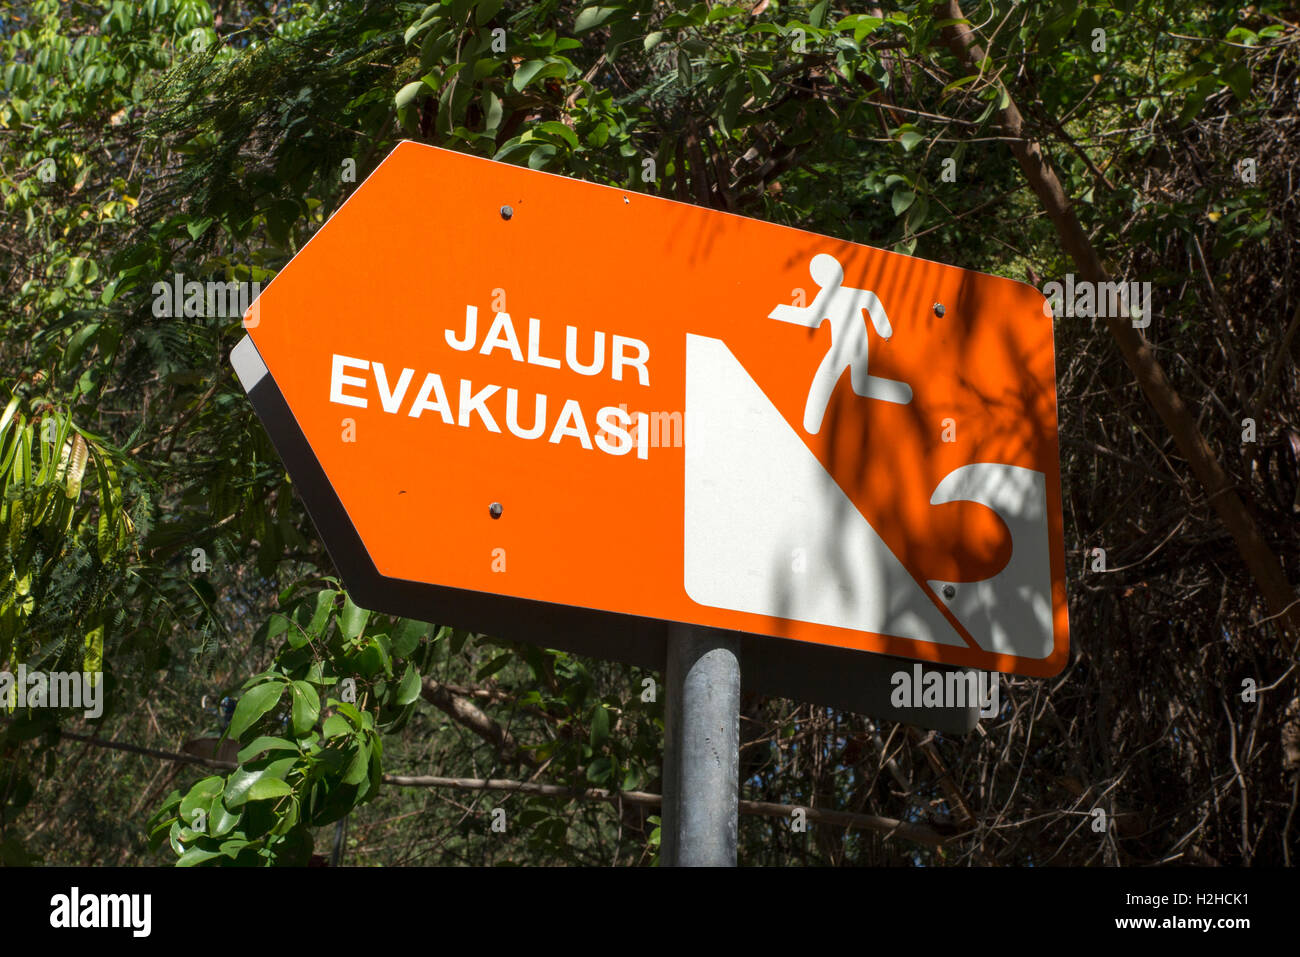 Indonesia, Bali, Padangbai, tsunami tidal wave evacuation direction sign, Jalur Evakuasi Stock Photo